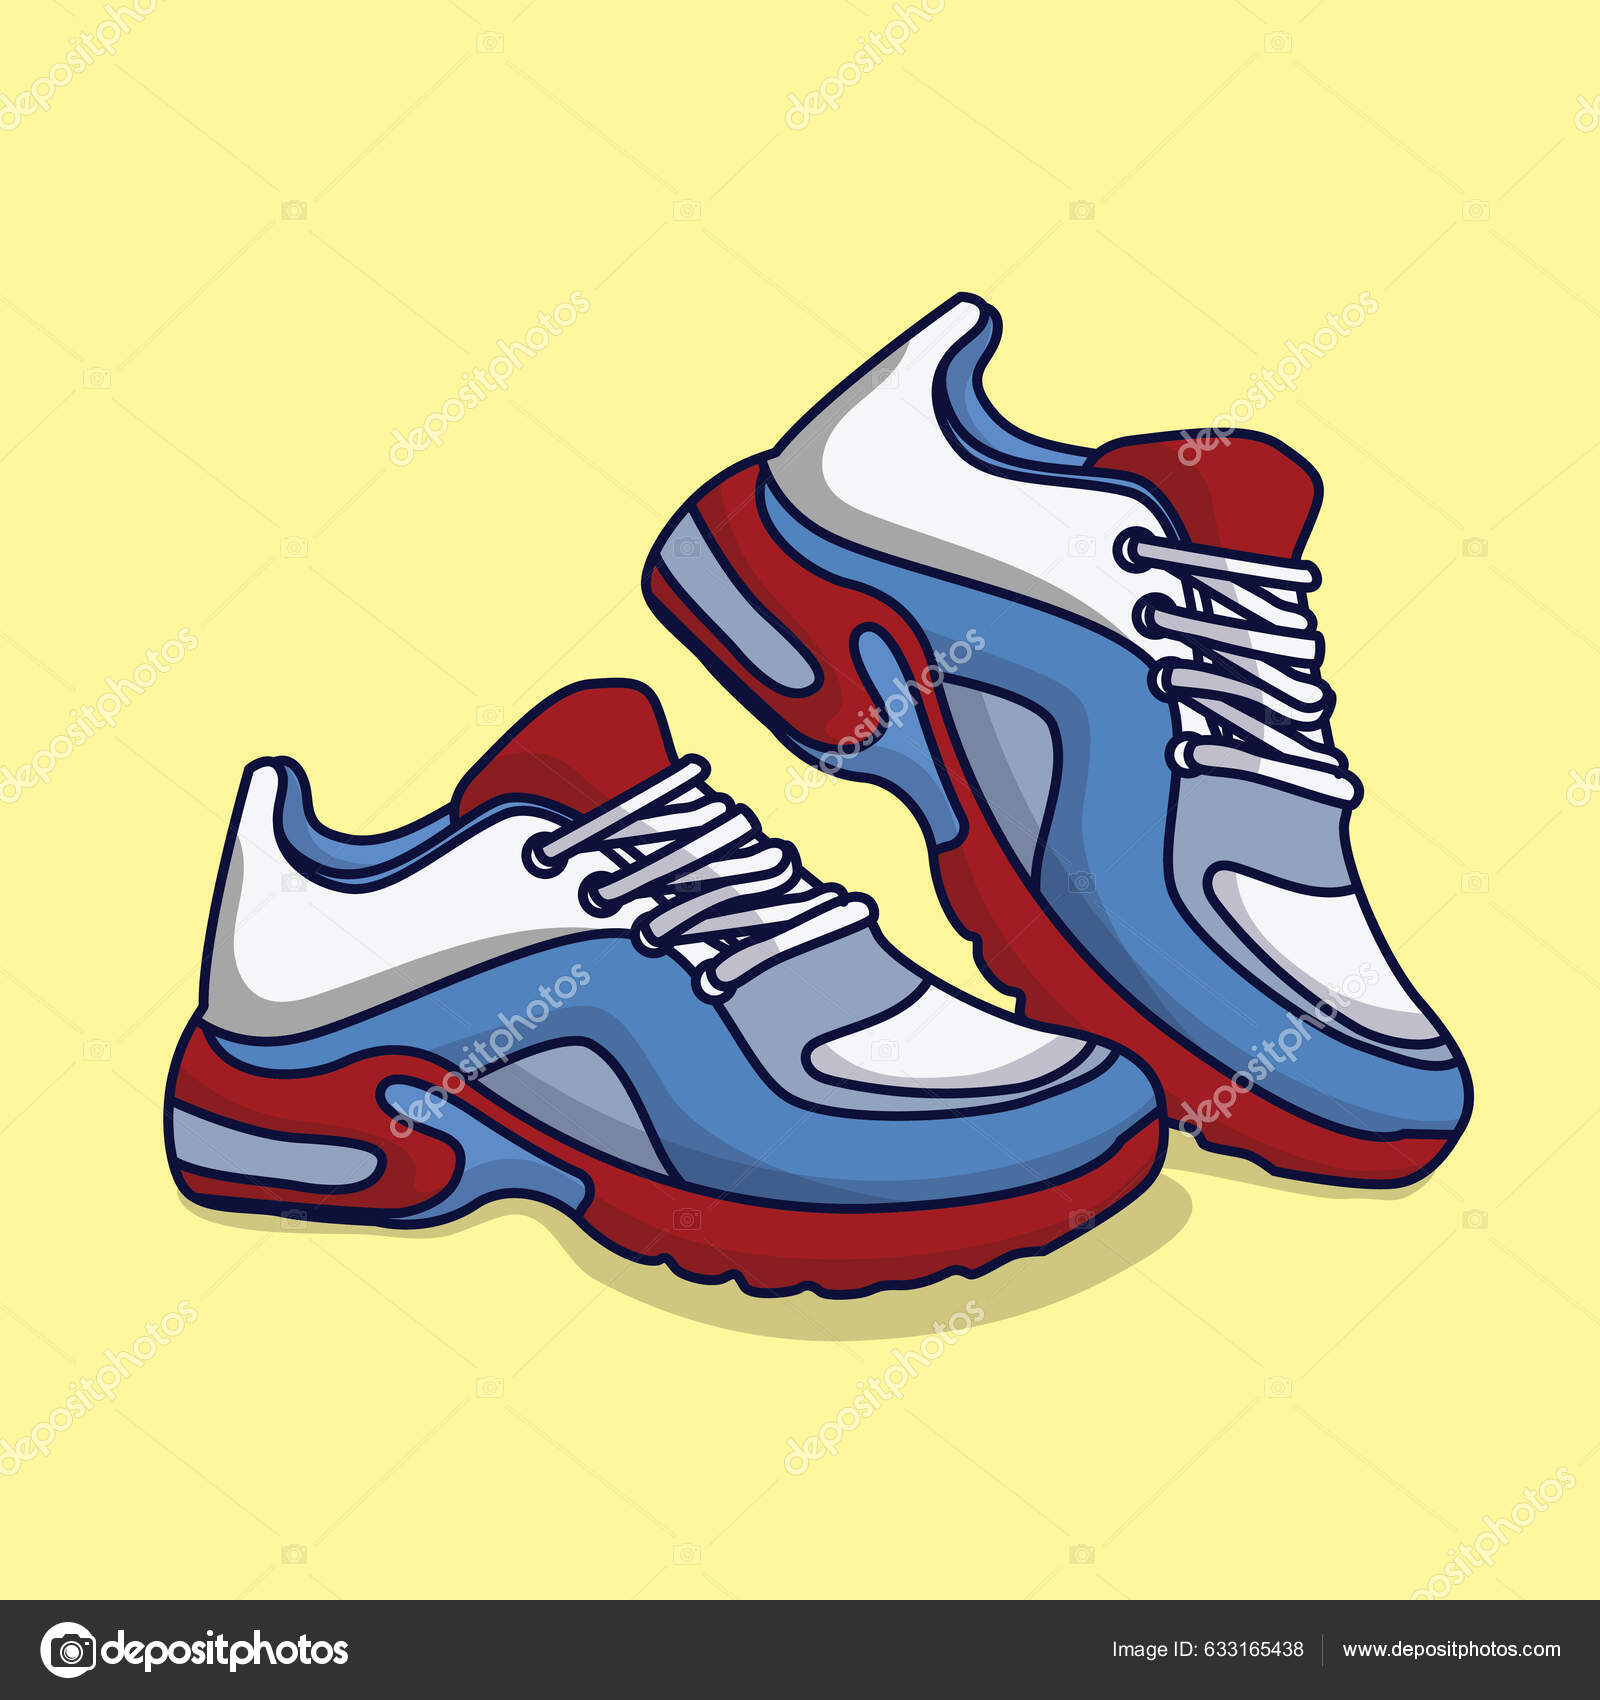 Nike shoes imágenes de stock de arte vectorial | Depositphotos